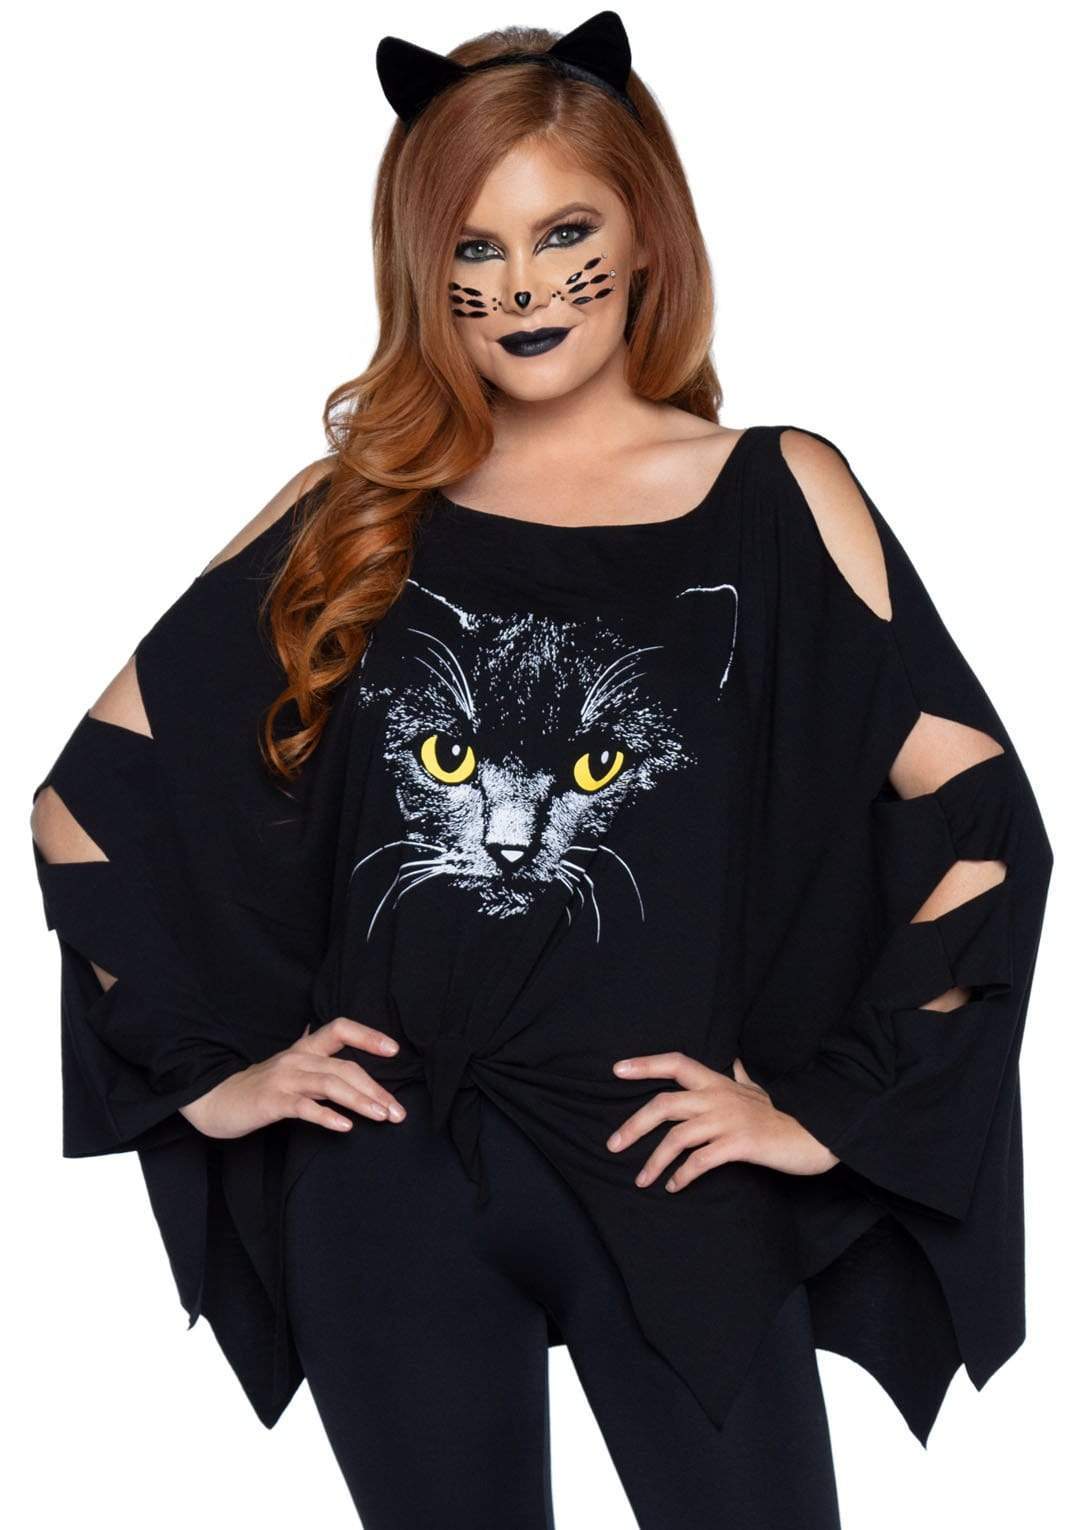 black cat costumes for women